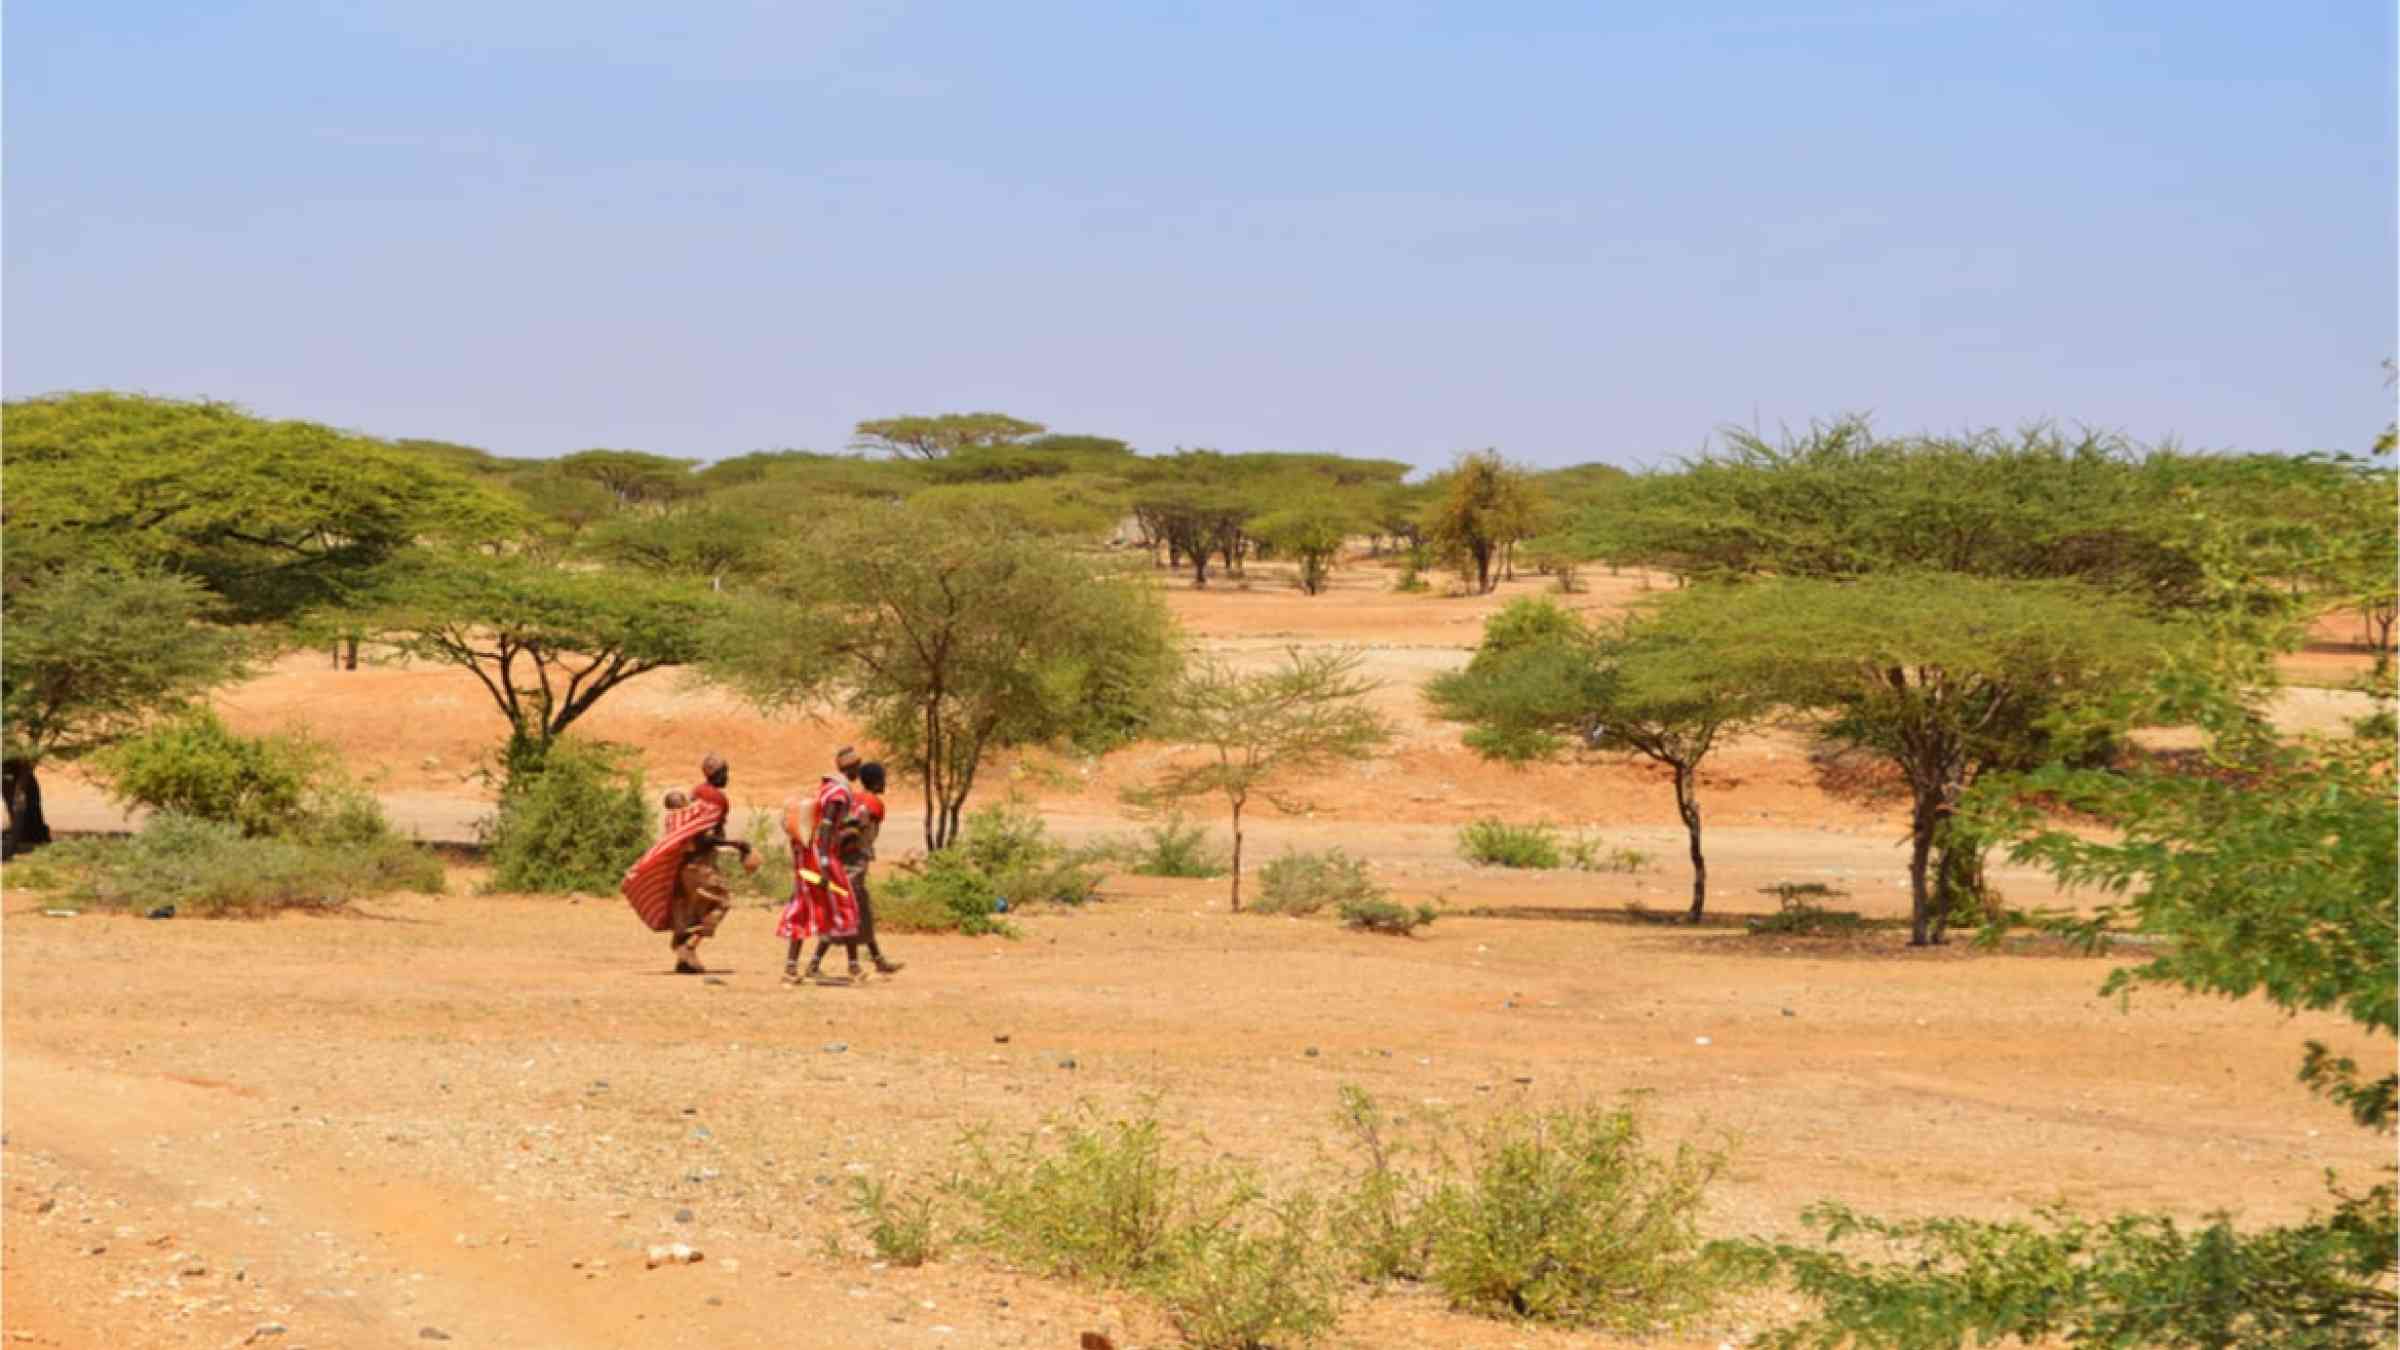 Women and children walking through the desert of Kenya looking for water.